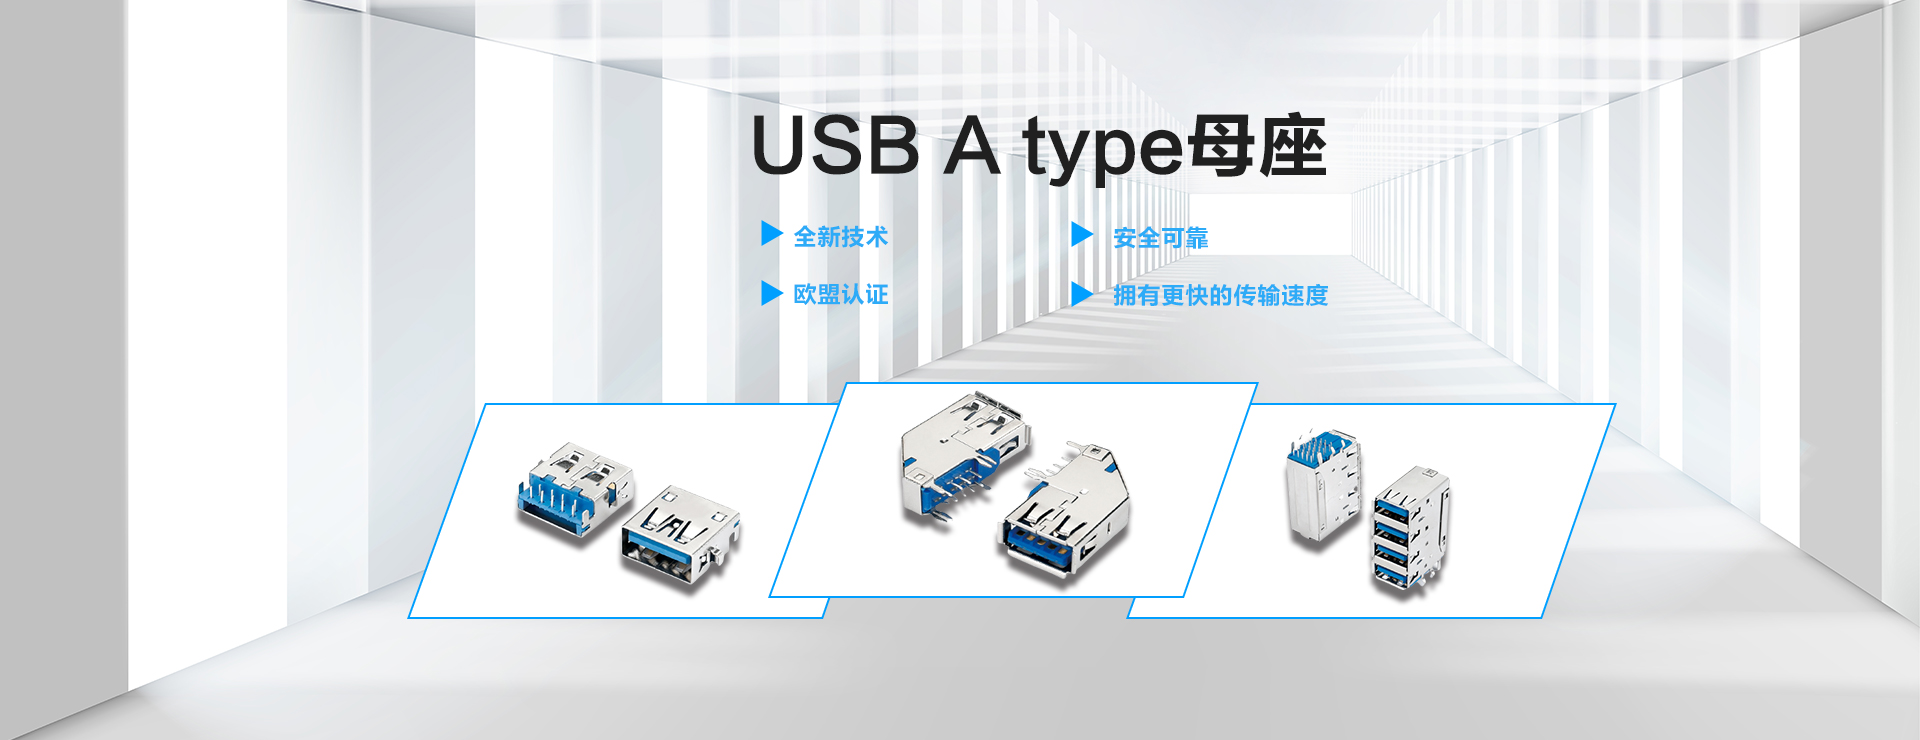 USB A type-c母座